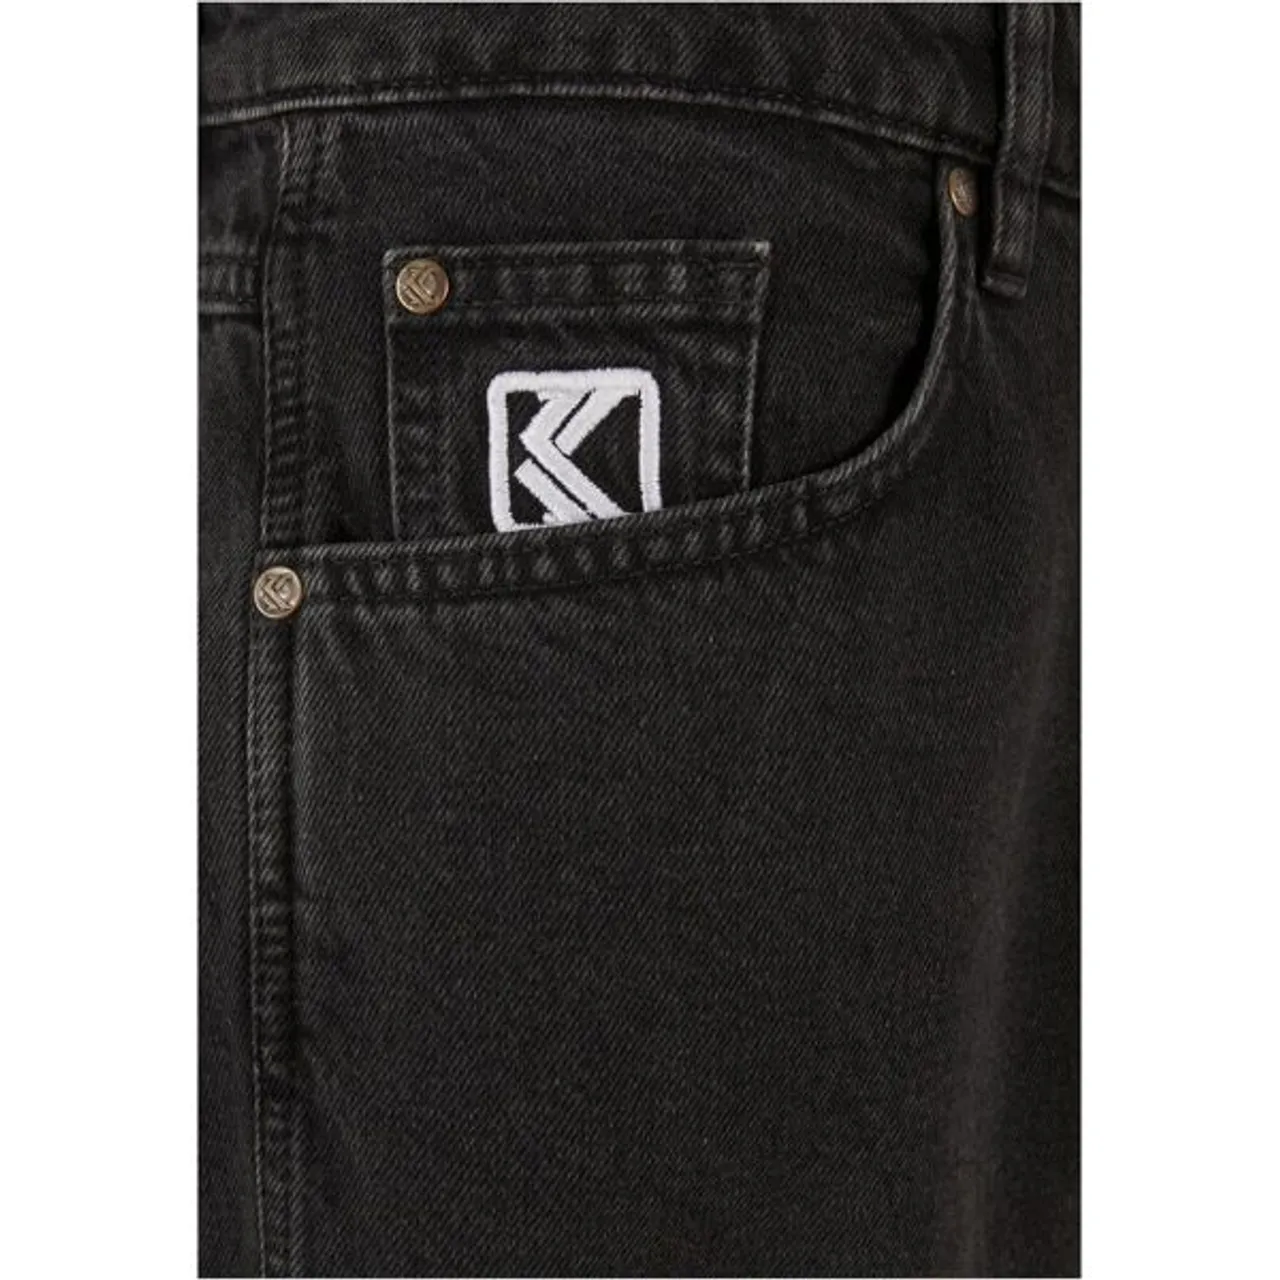 Bequeme Jeans KARL KANI "Karl Kani Herren" Gr. 36, Normalgrößen, schwarz (vintage black) Herren Jeans